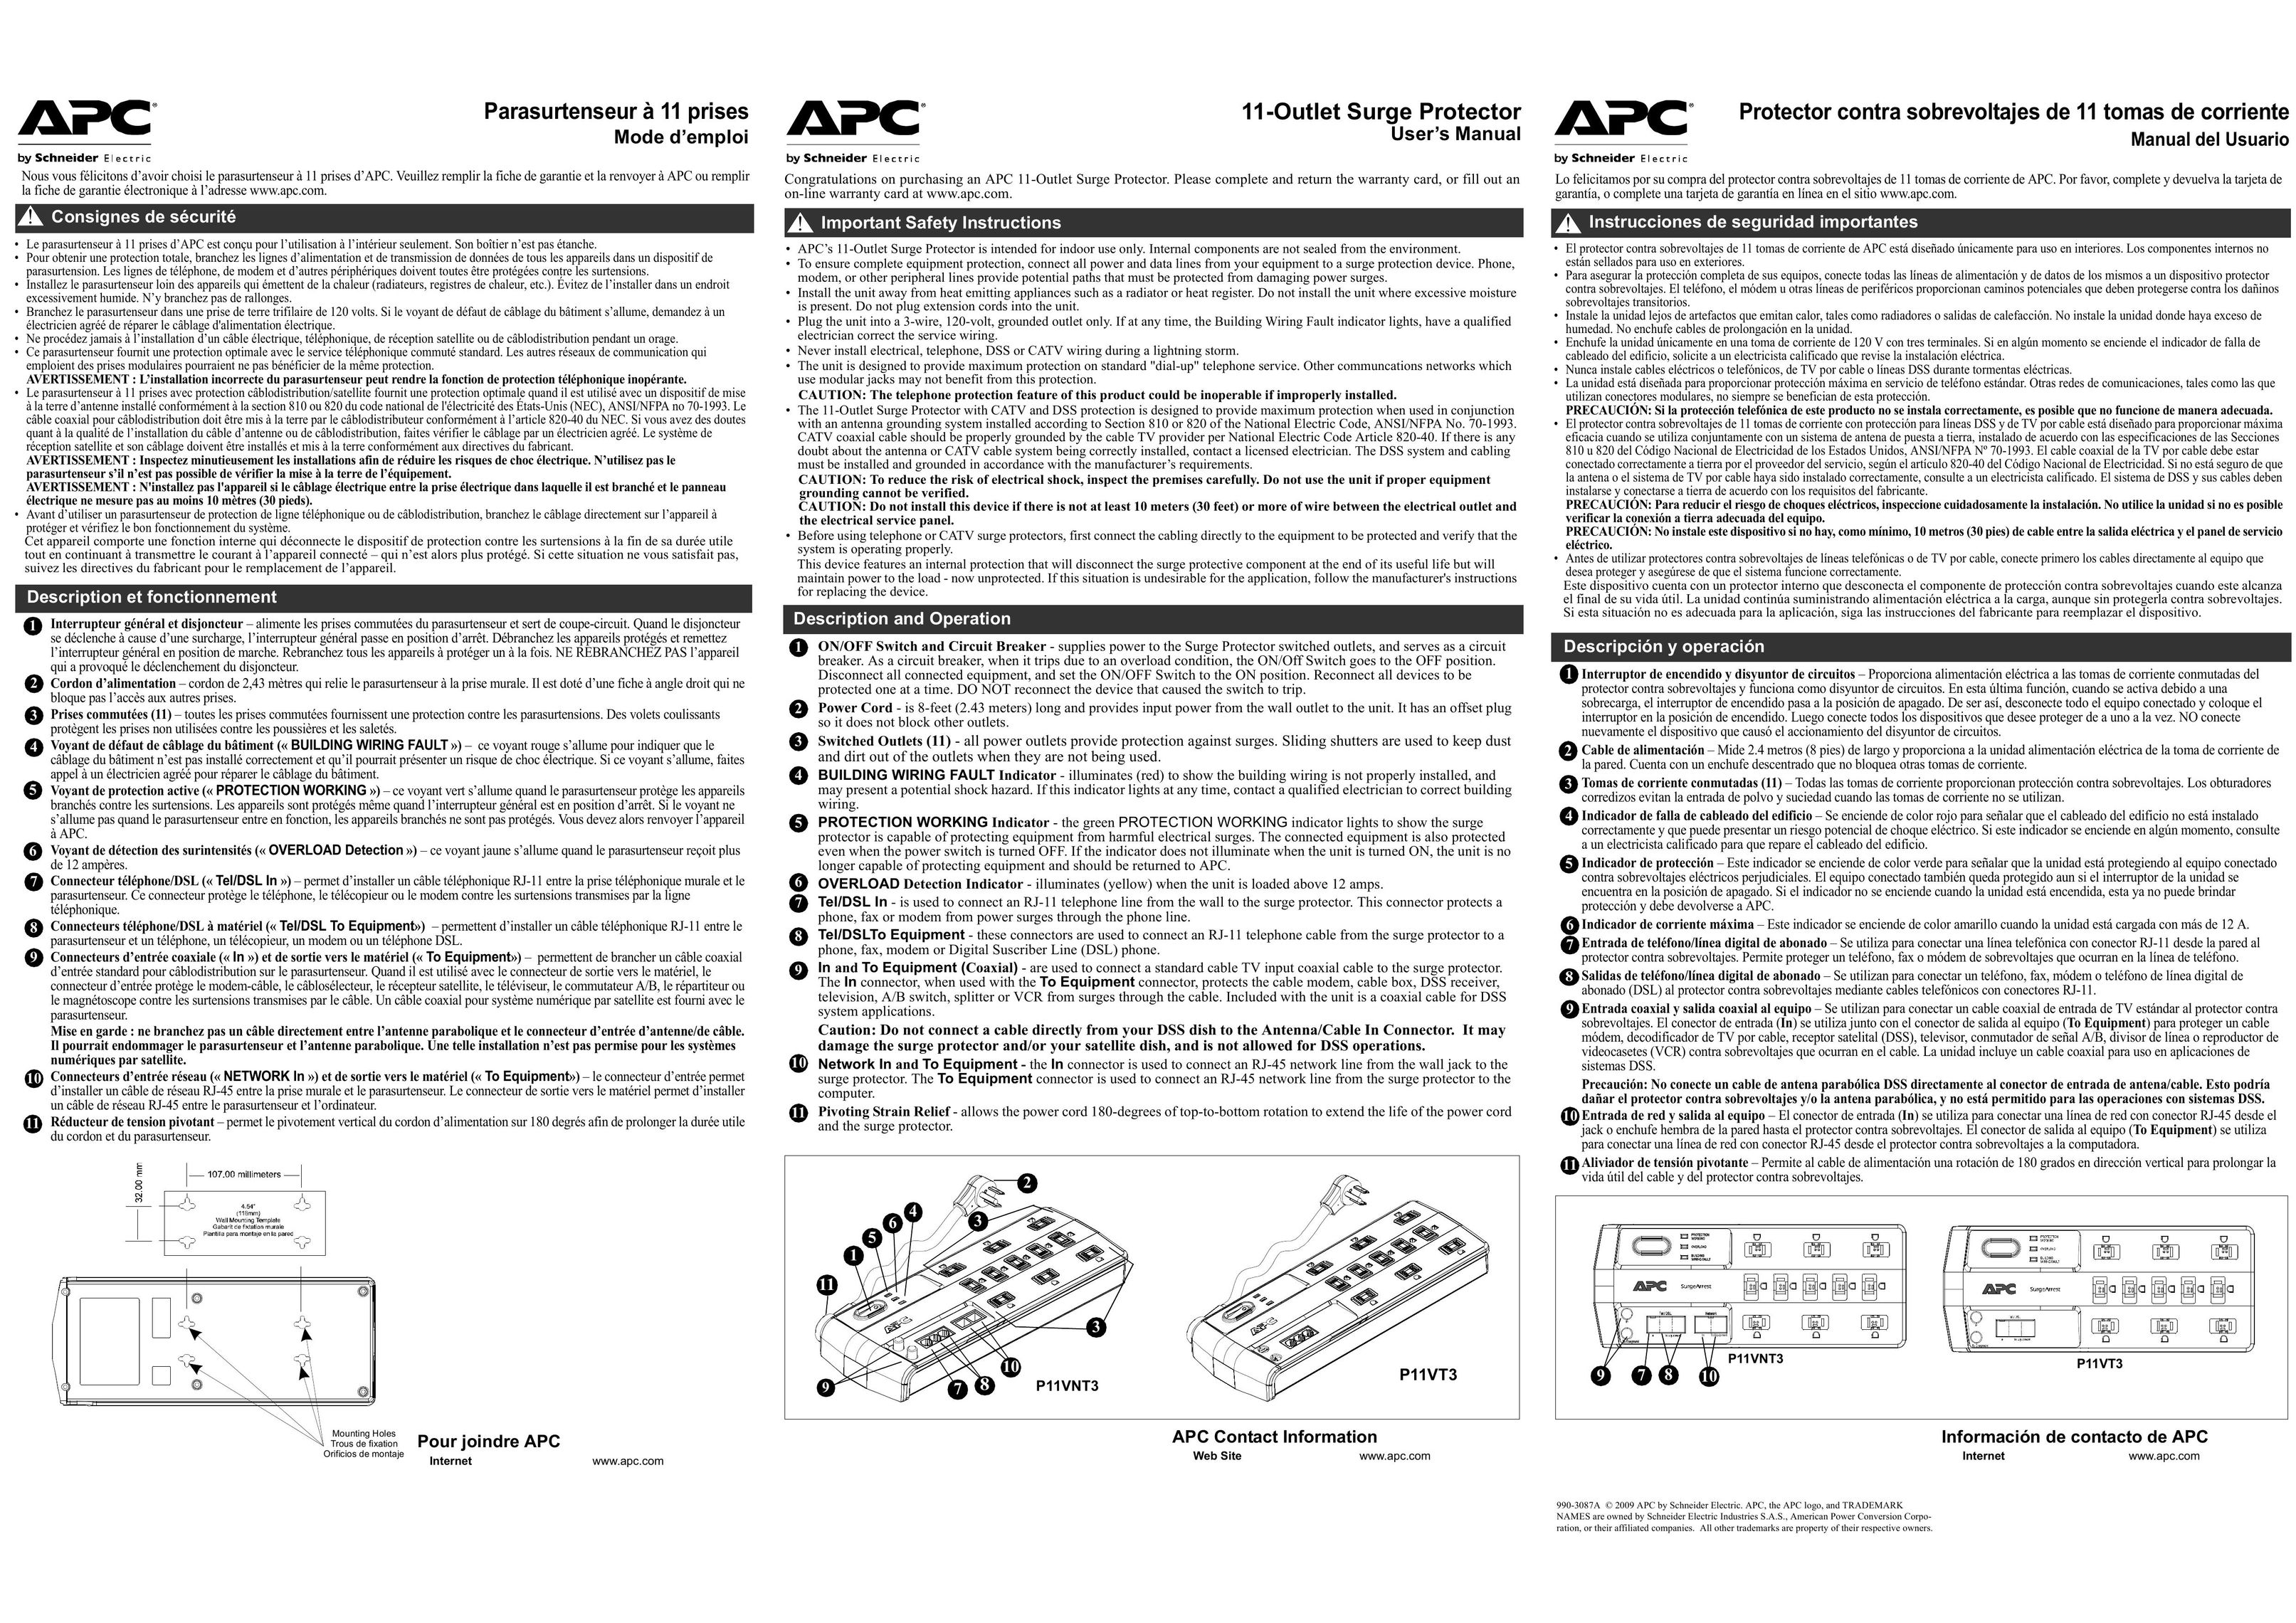 APC P11VNT3 Surge Protector User Manual